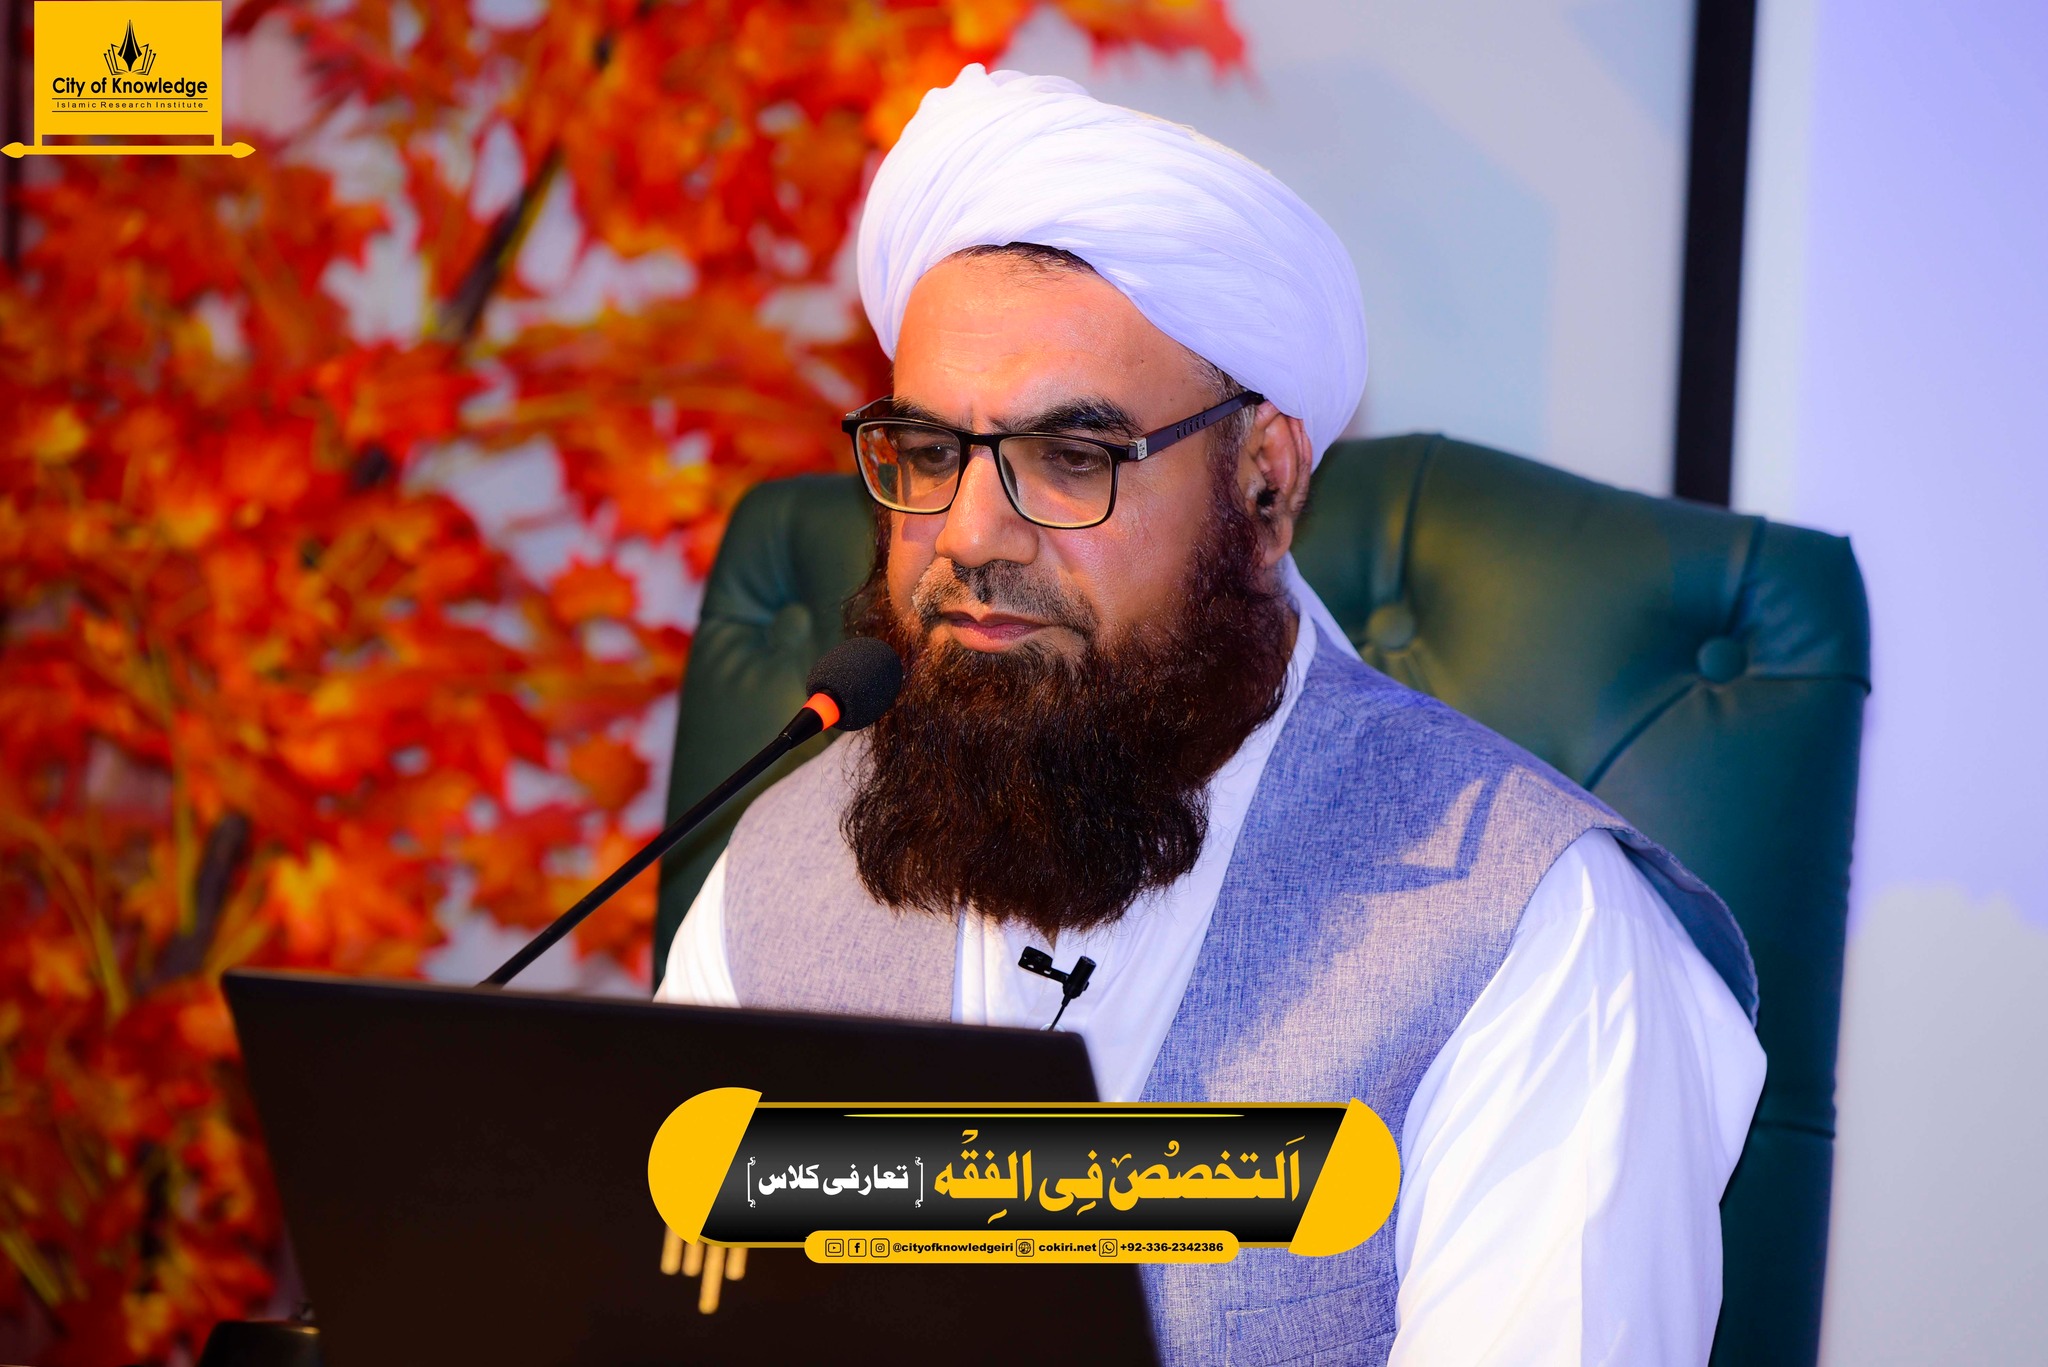 Mufti Abdul Bari